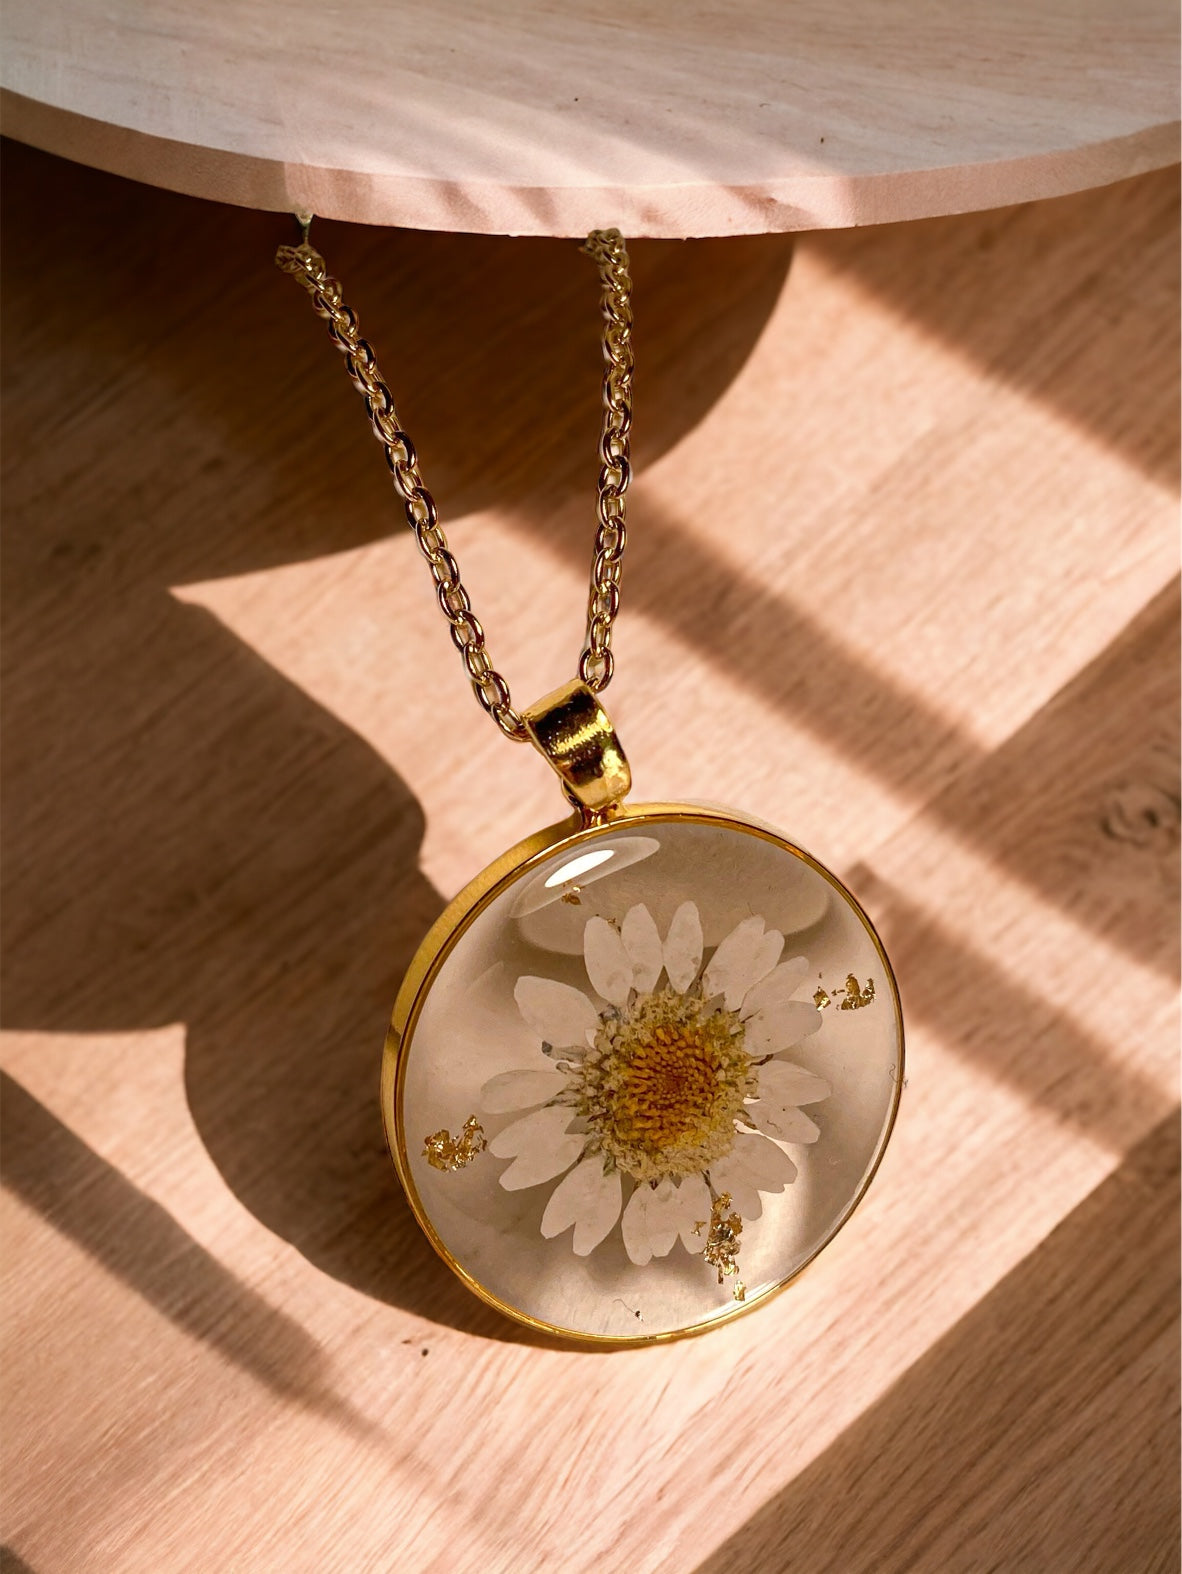 Pressed flower necklace - White Flower